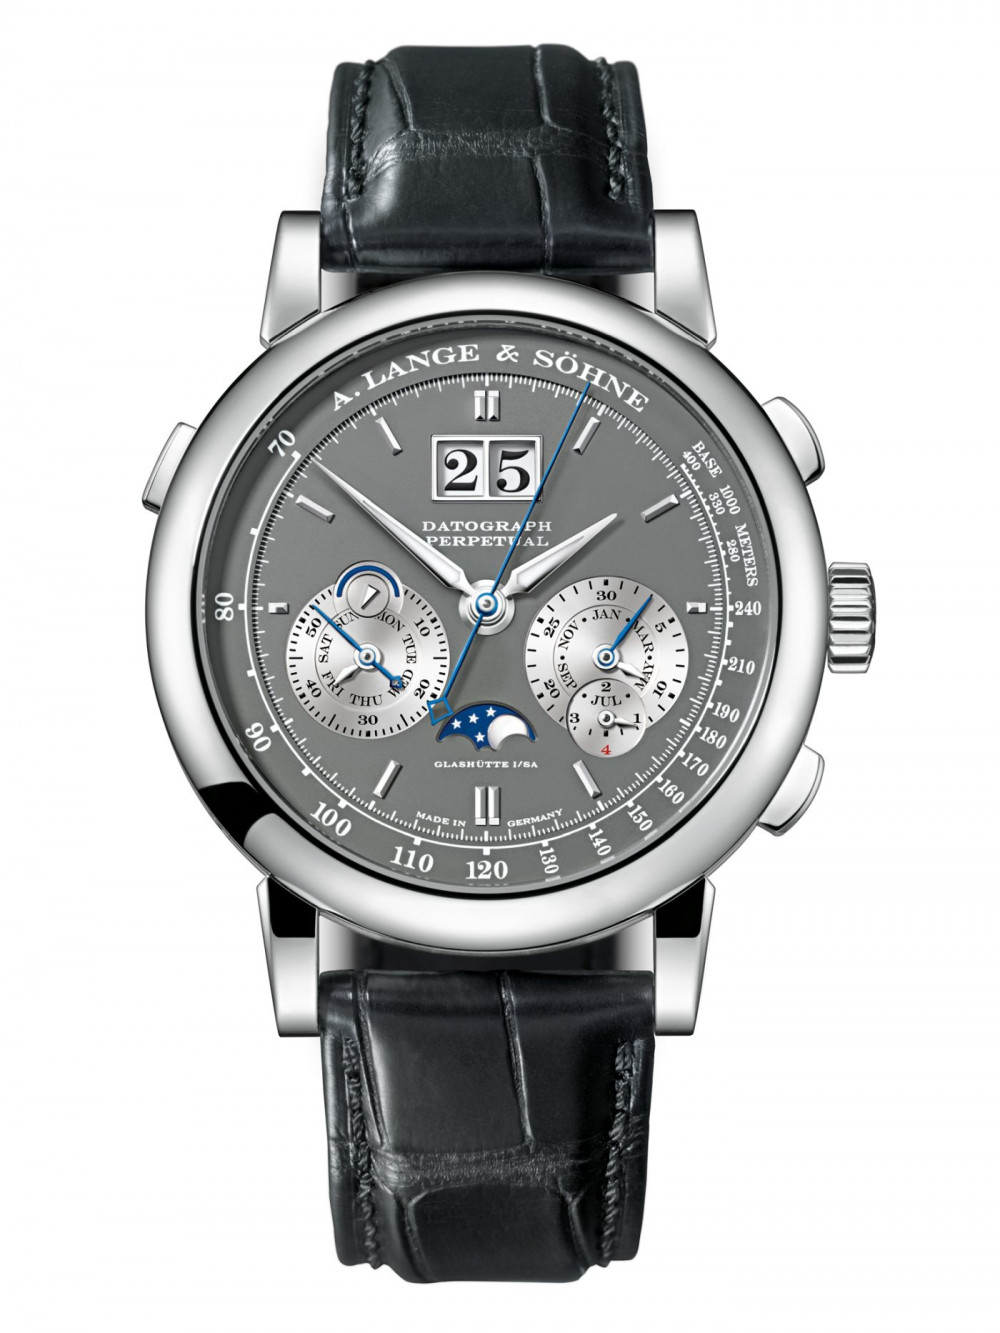 Zegarek firmy A. Lange & Söhne, model Datograph Perpetual